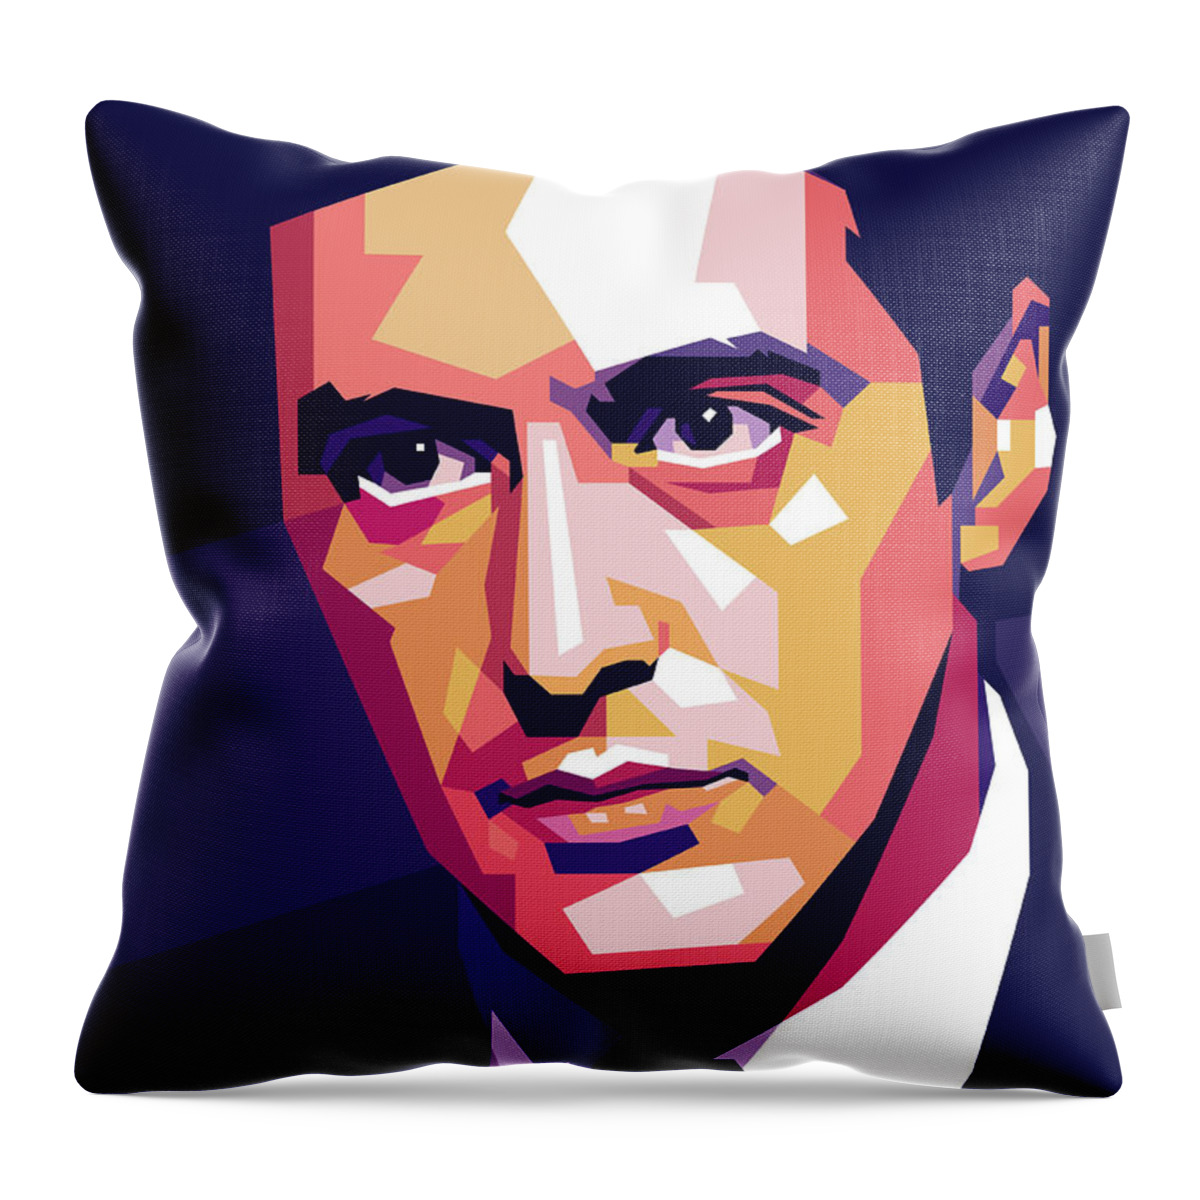 Al Pacino Throw Pillow featuring the digital art Al Pacino pop art by Stars on Art